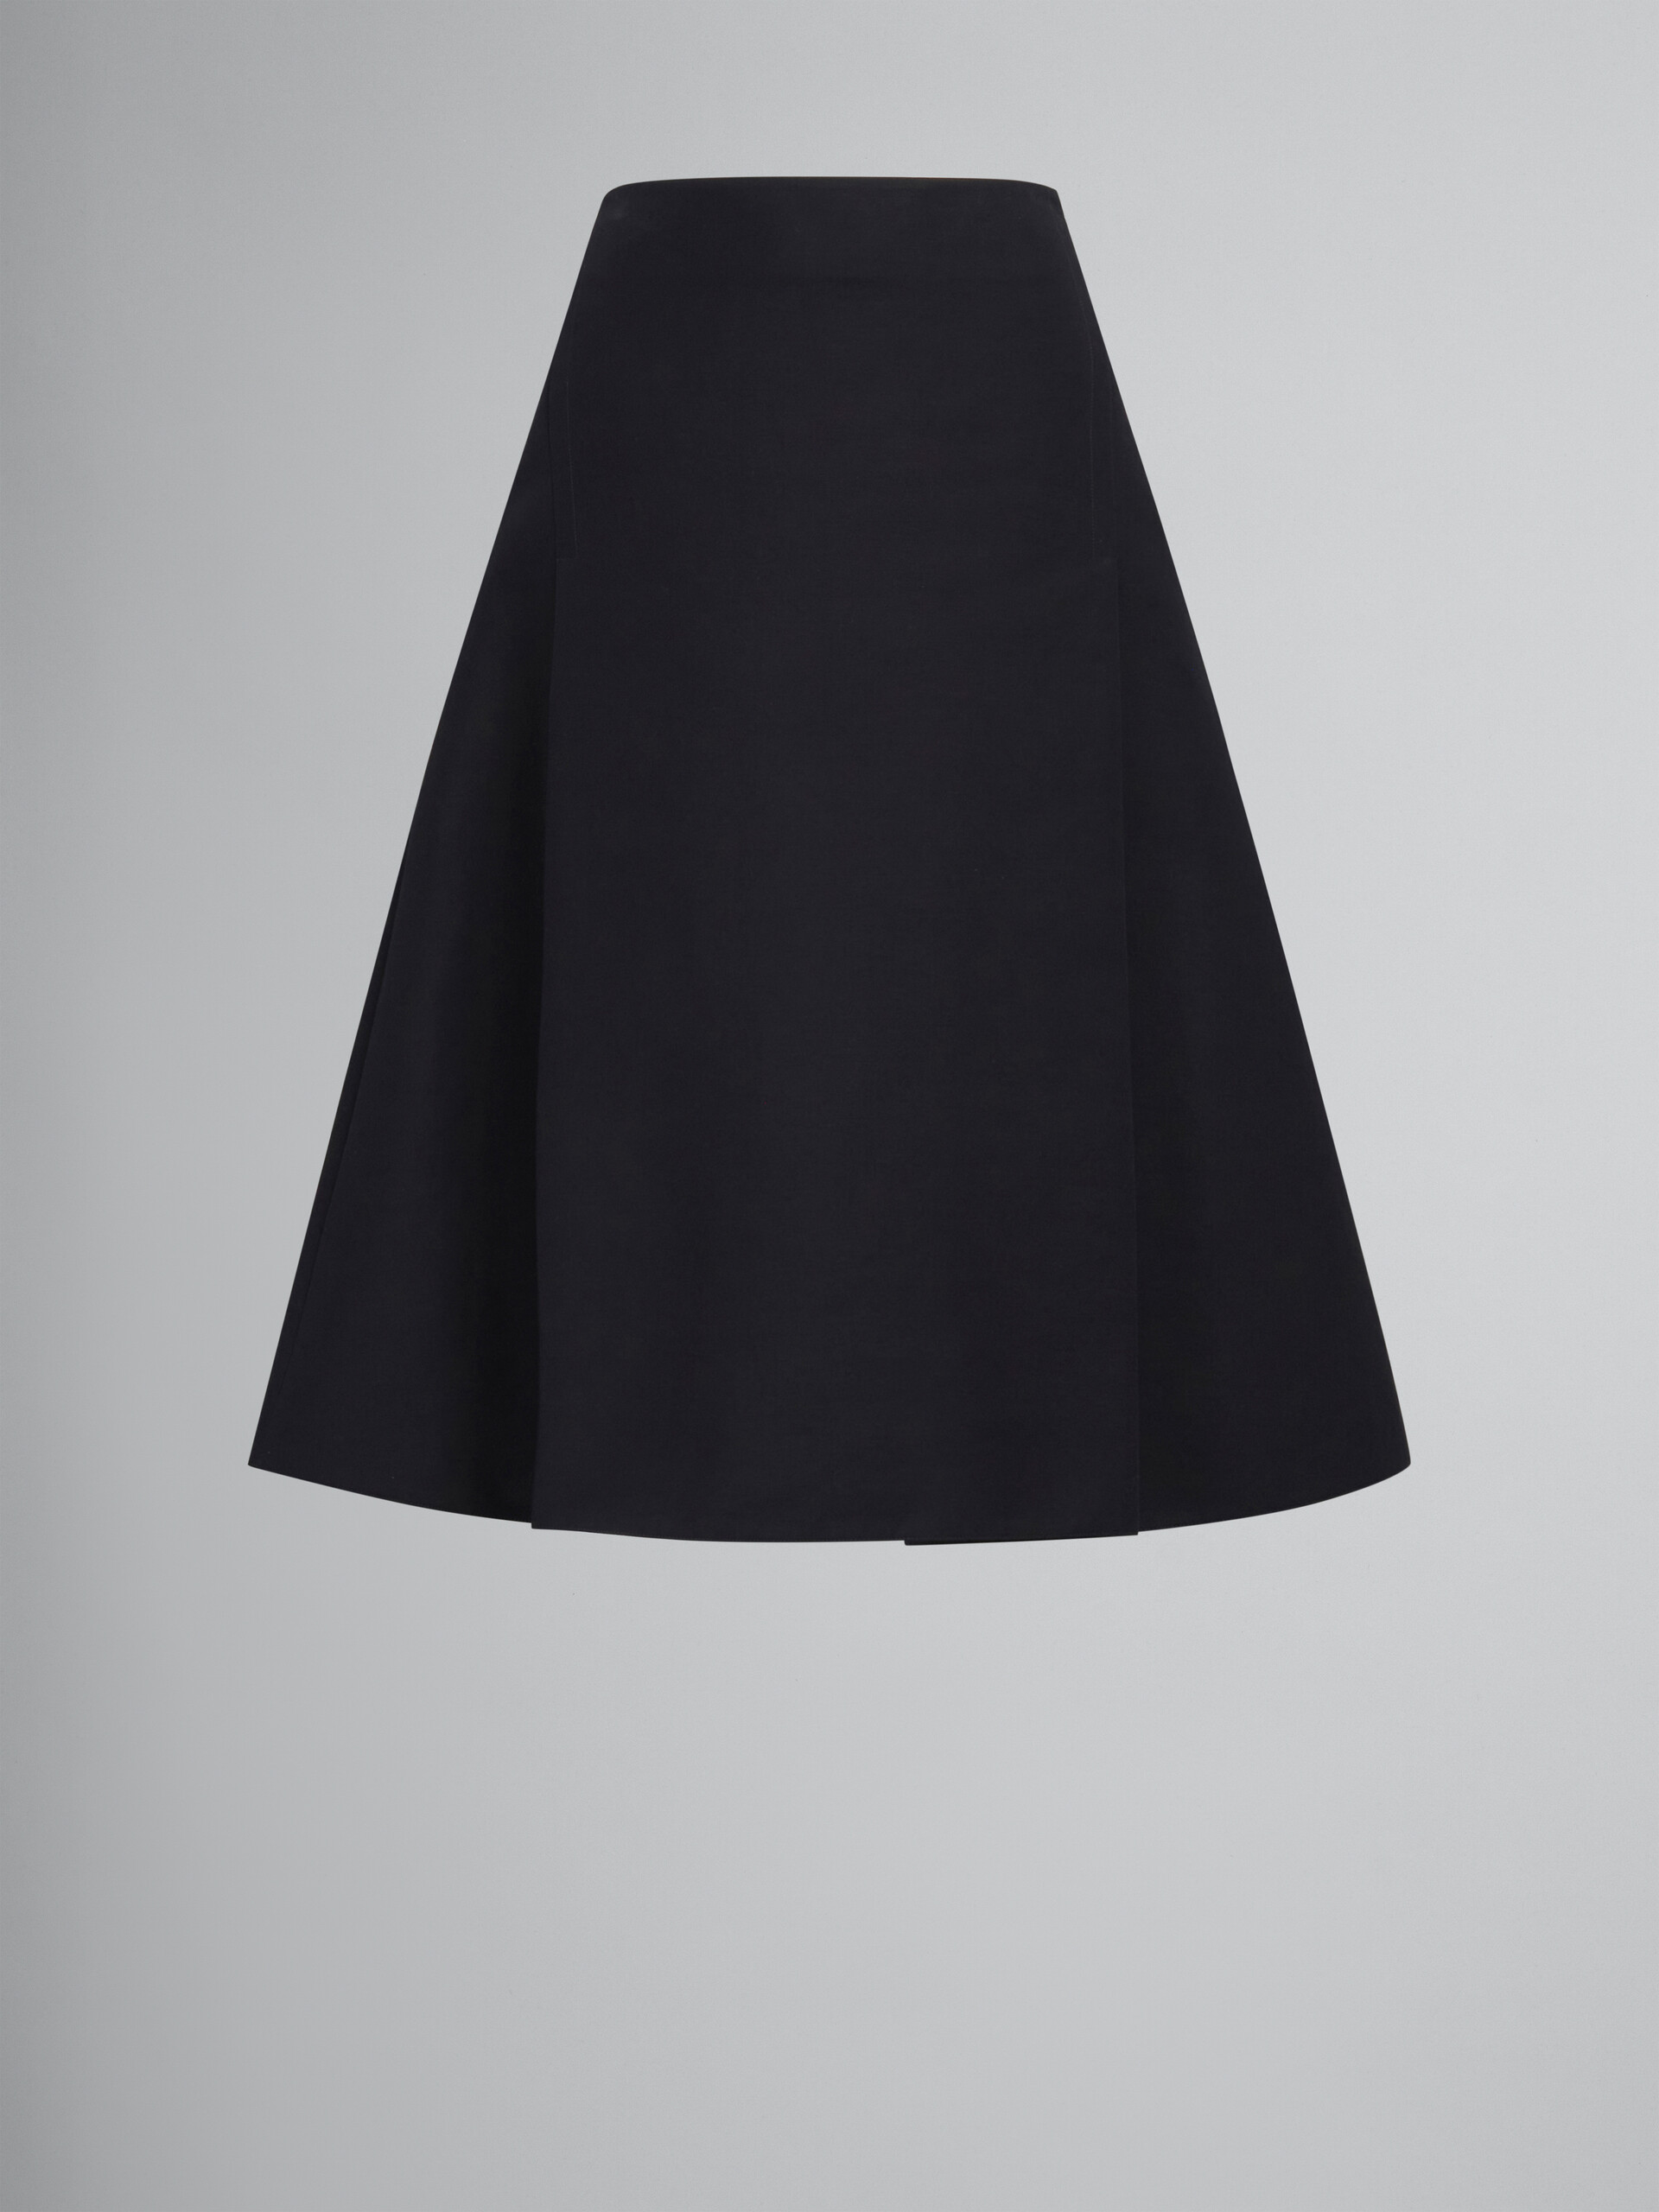 Black cady midi skirt with maxi pleats - Skirts - Image 1